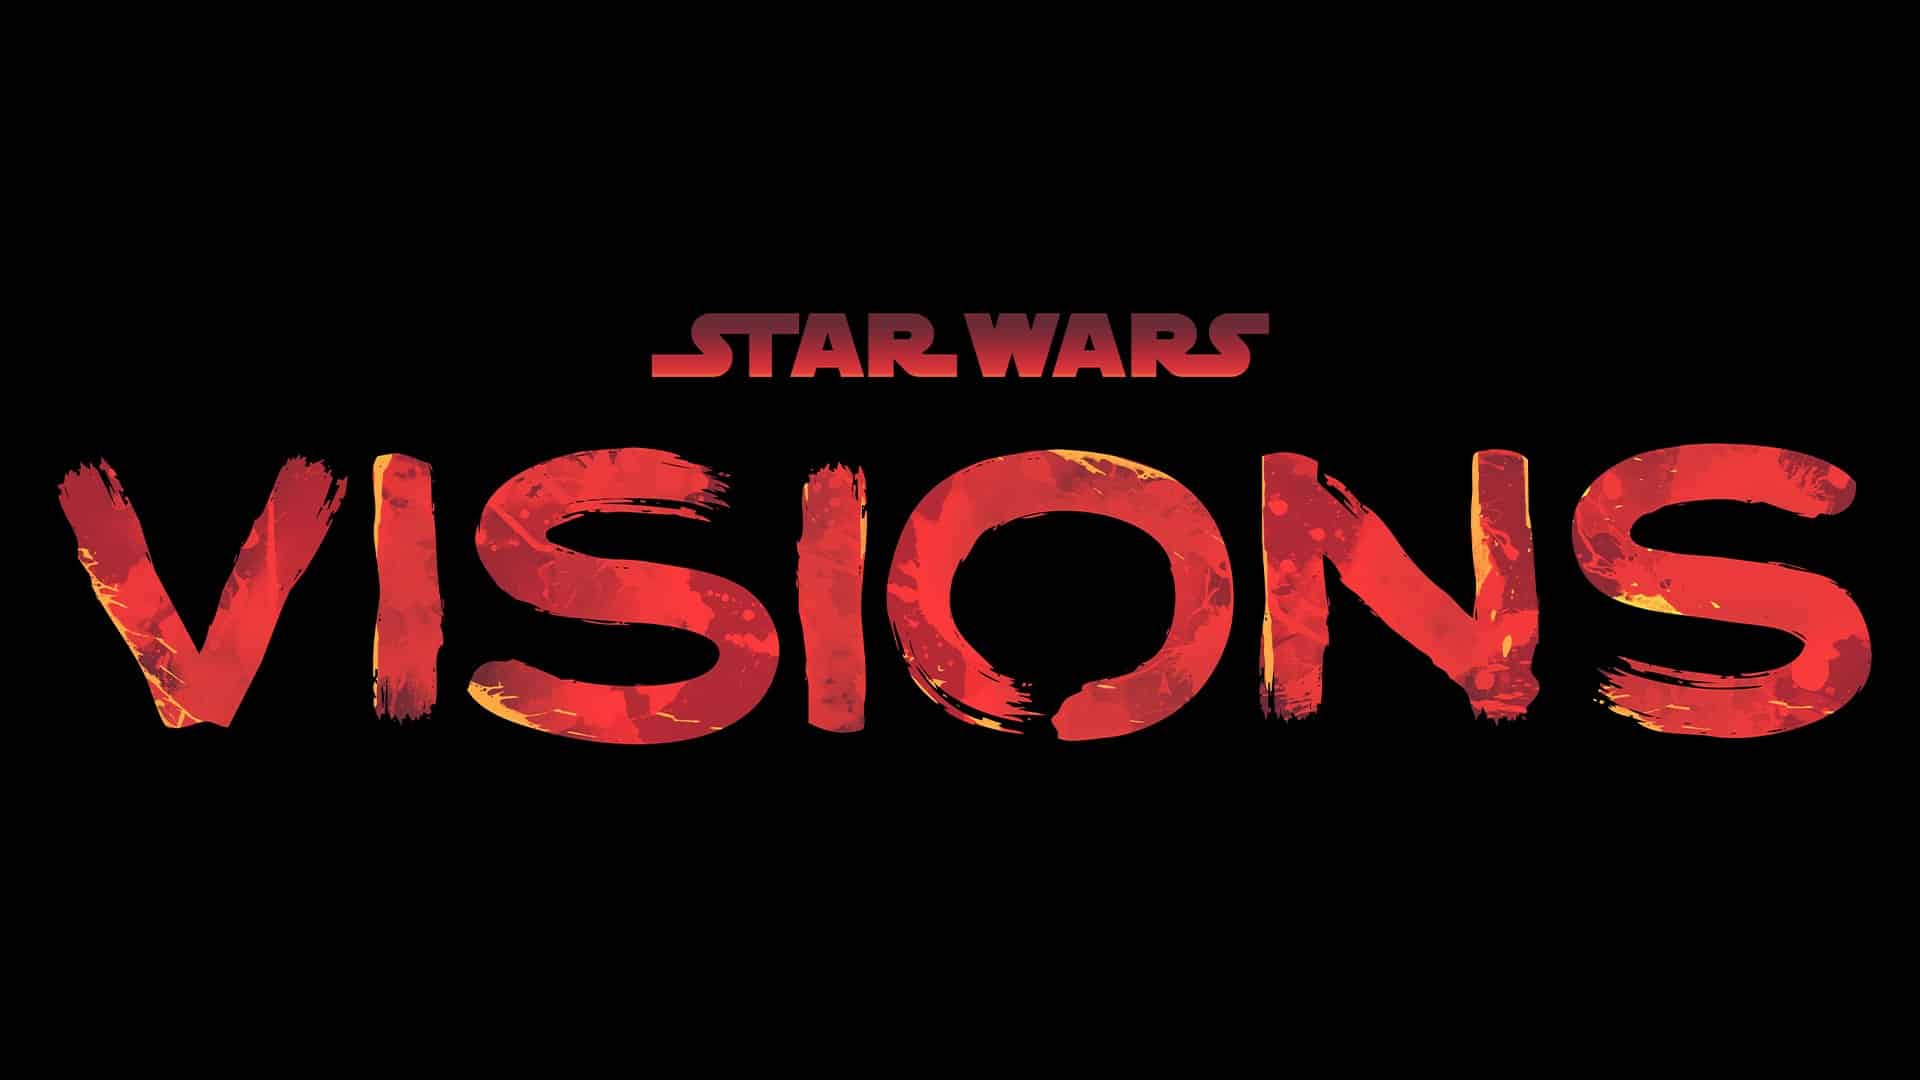 “Star Wars Visions Volume 2” Trailer Released During Star Wars